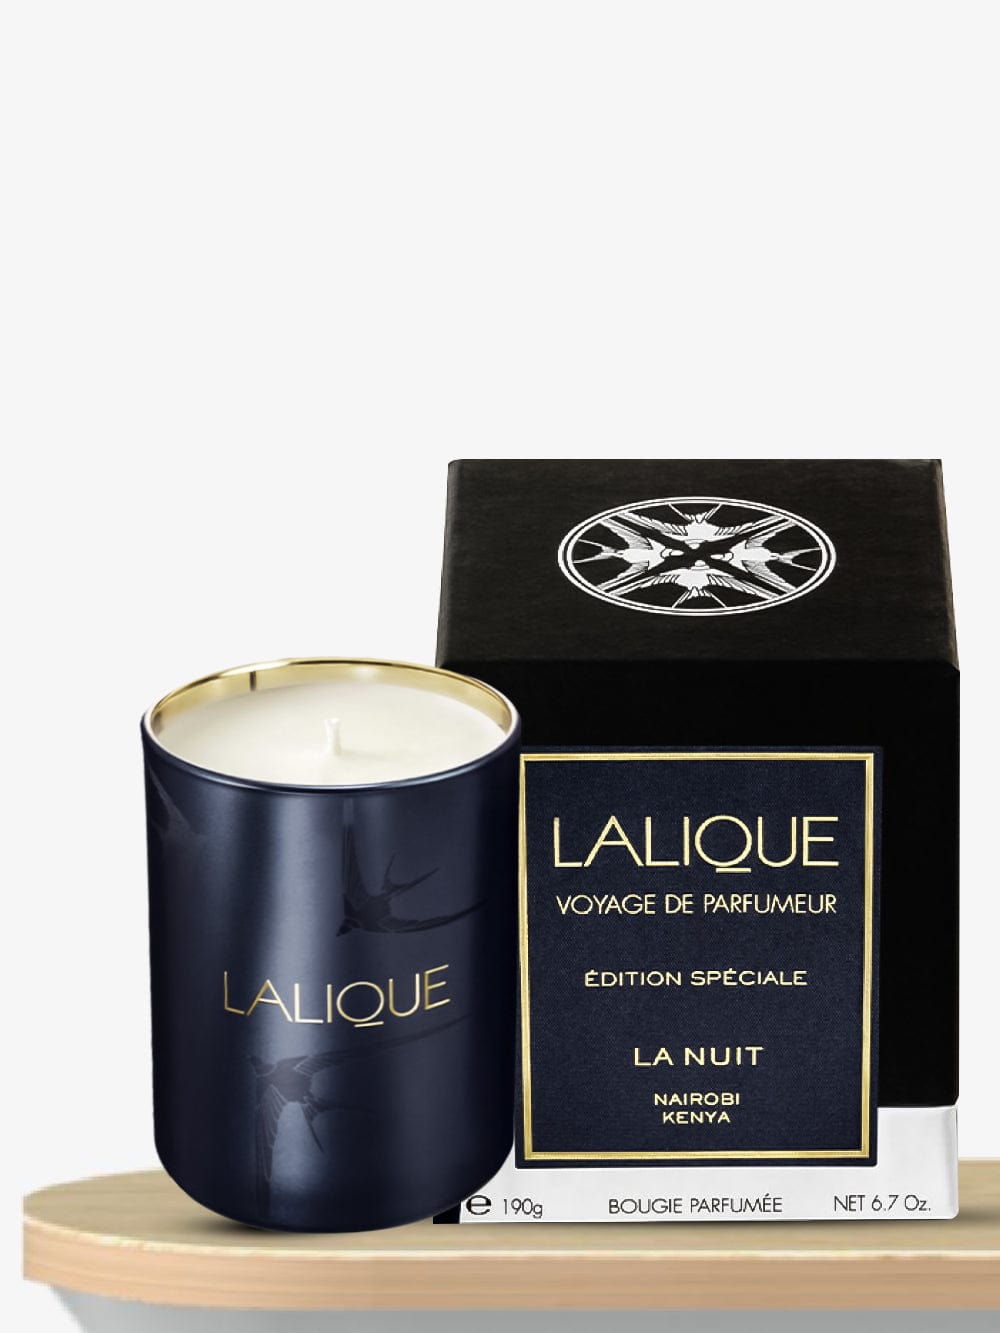 Lalique La Nuit Nairobi Kenya Scented Candle 190g